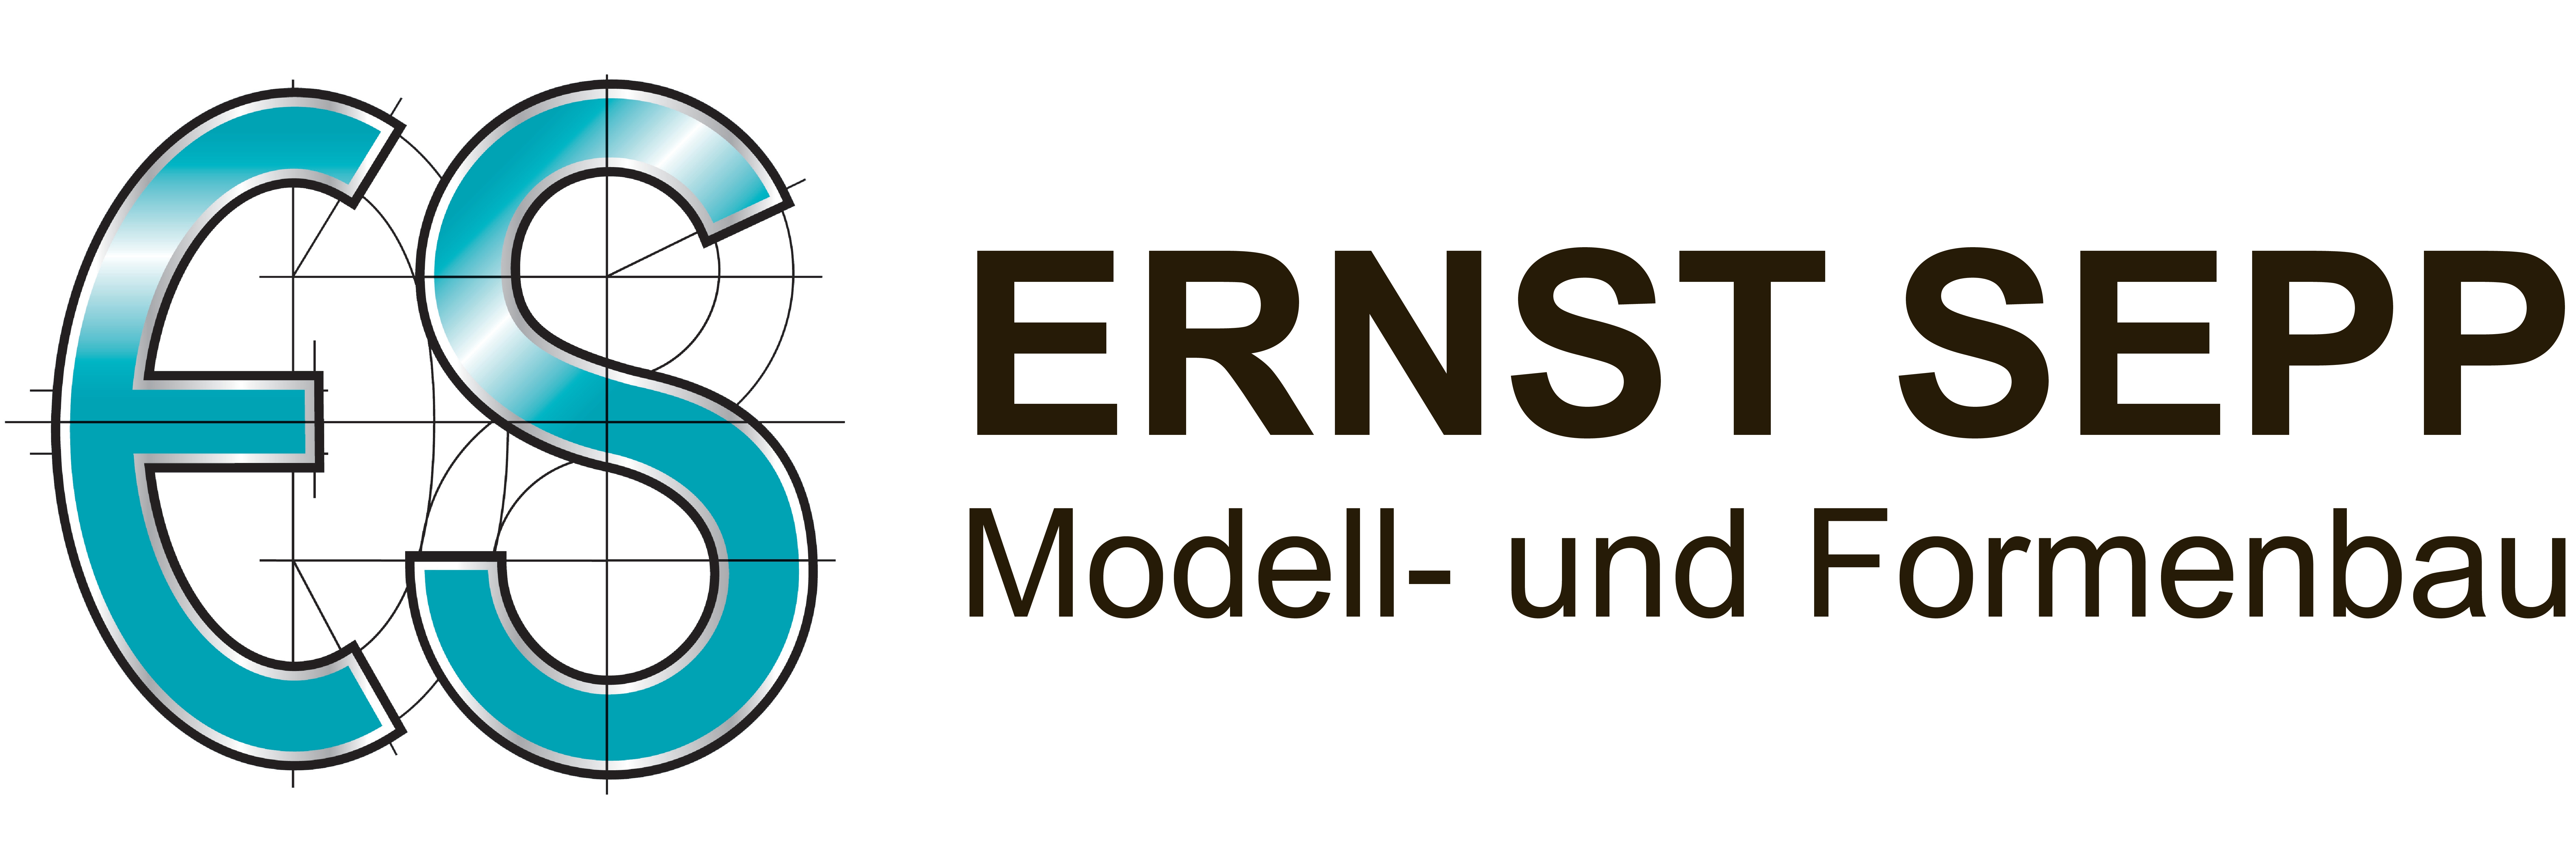 Ernst Sepp Modell- und Formenbau Logo